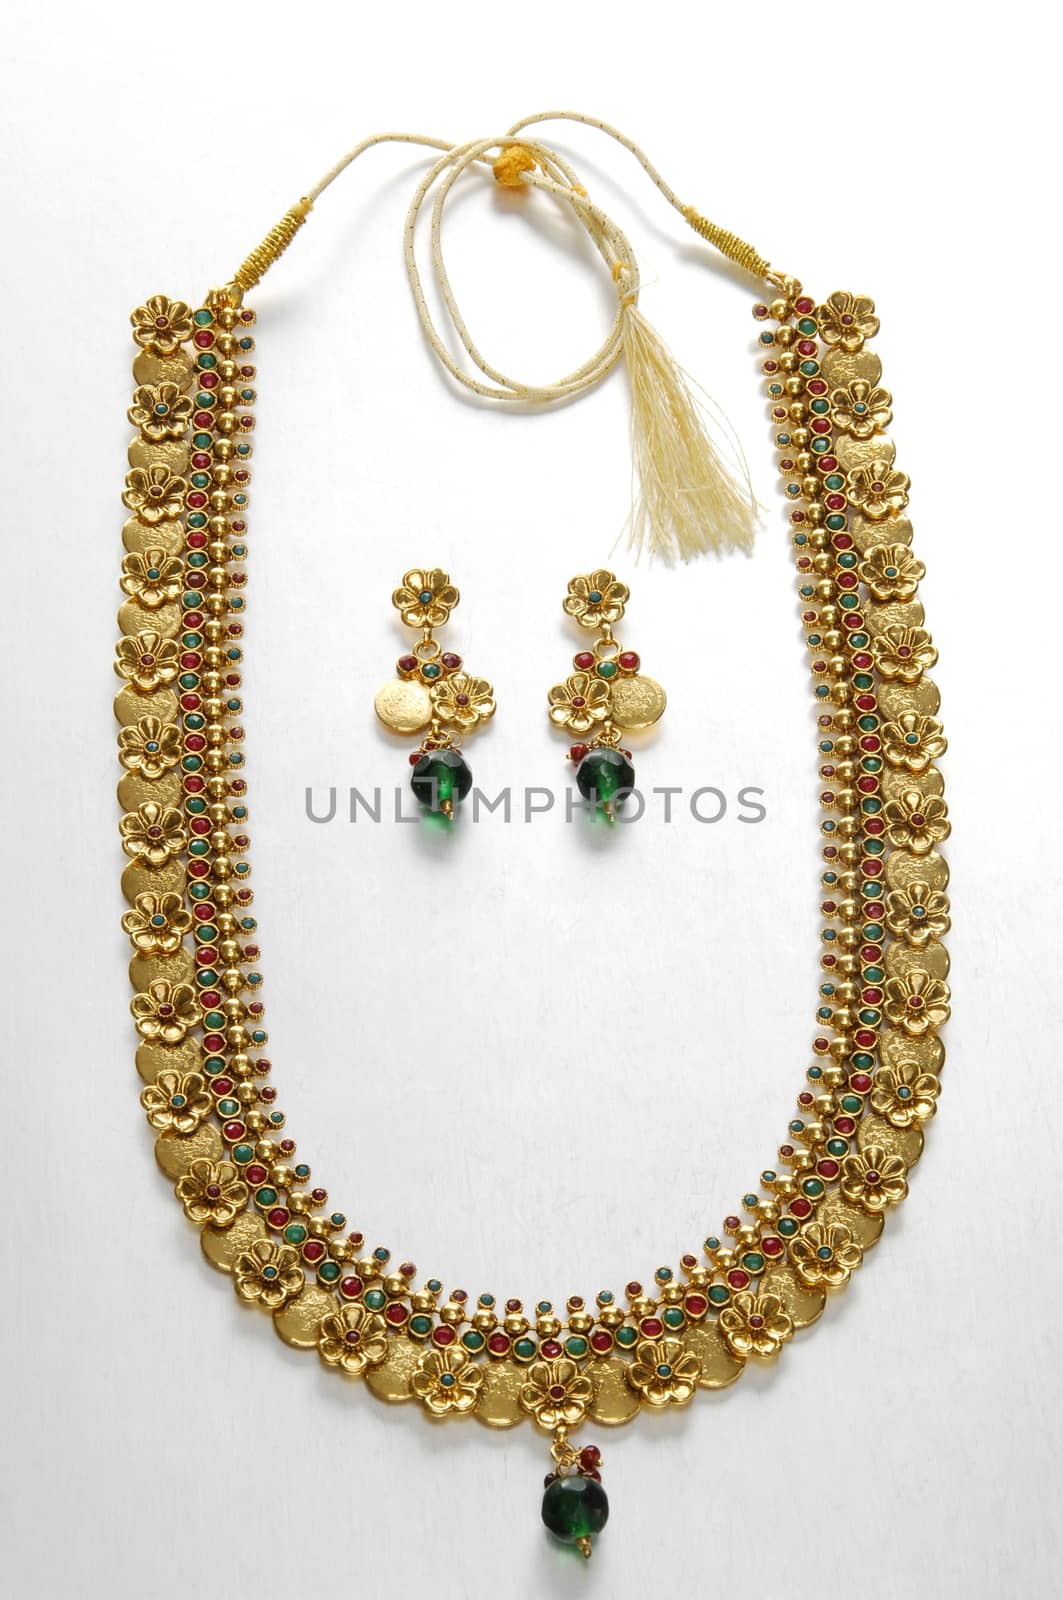 Gold jewelry Macro shot by rajastills